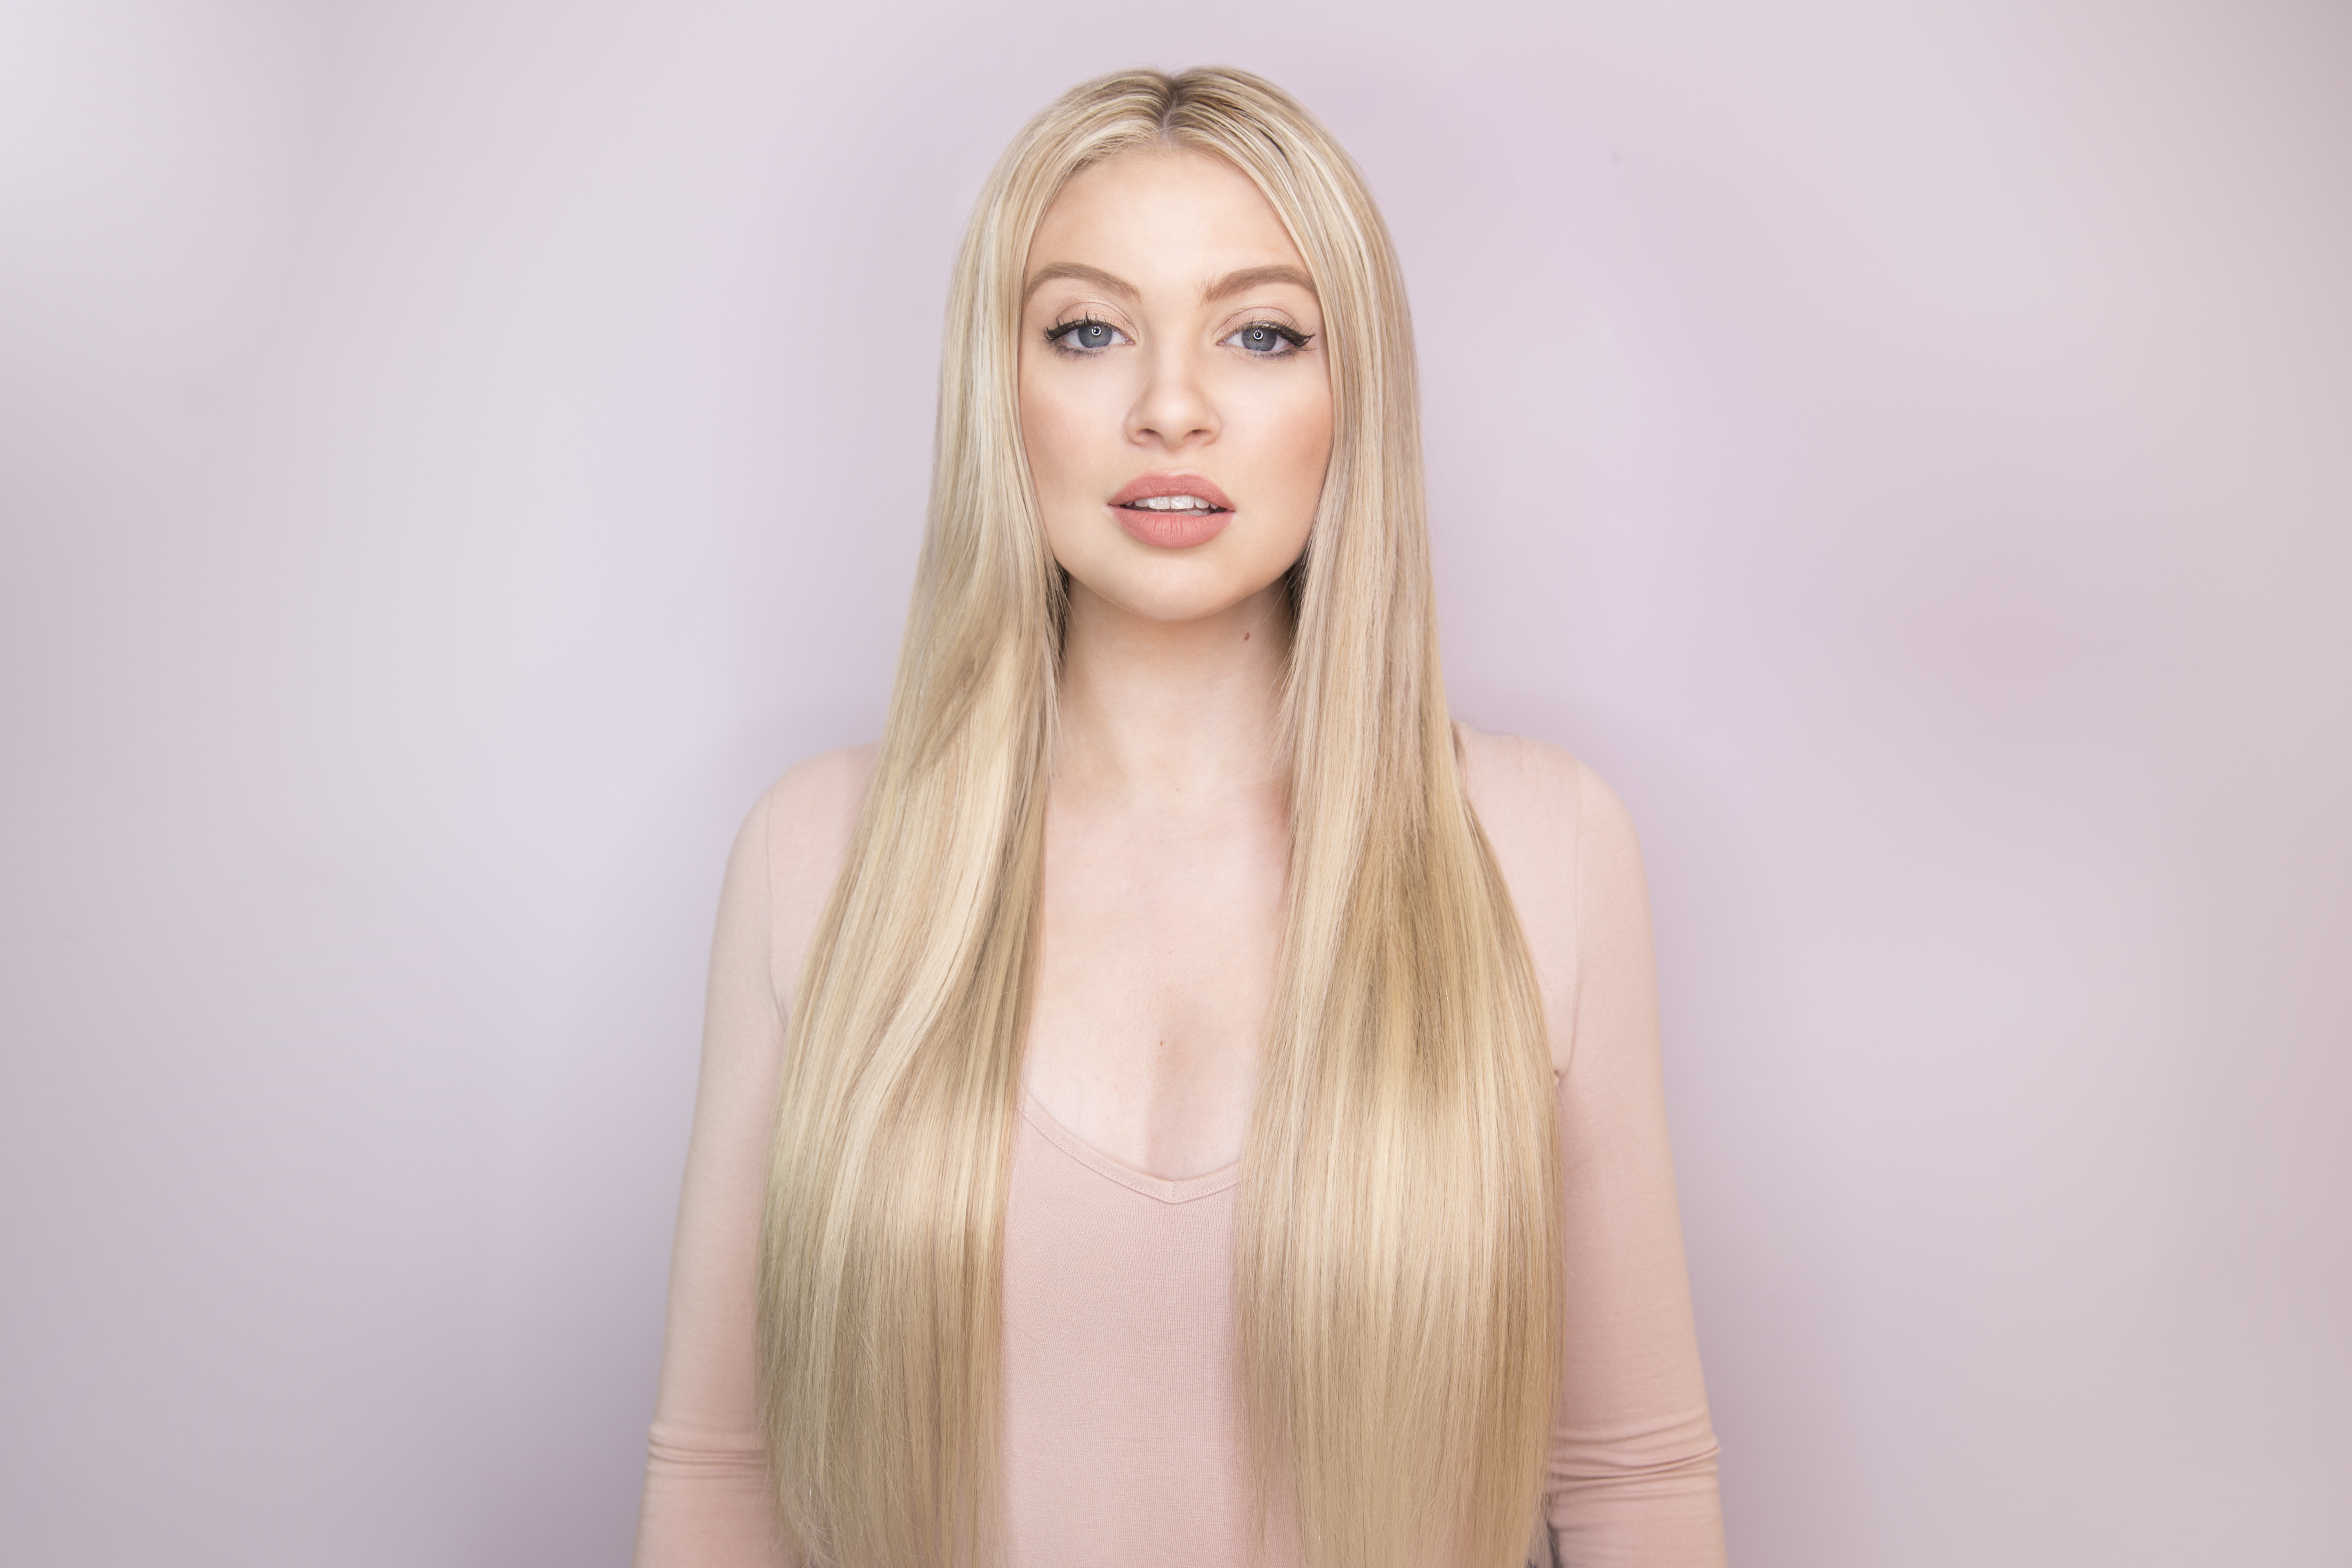  Blonde  Hair  Model  HD Girls 4k Wallpapers Images 